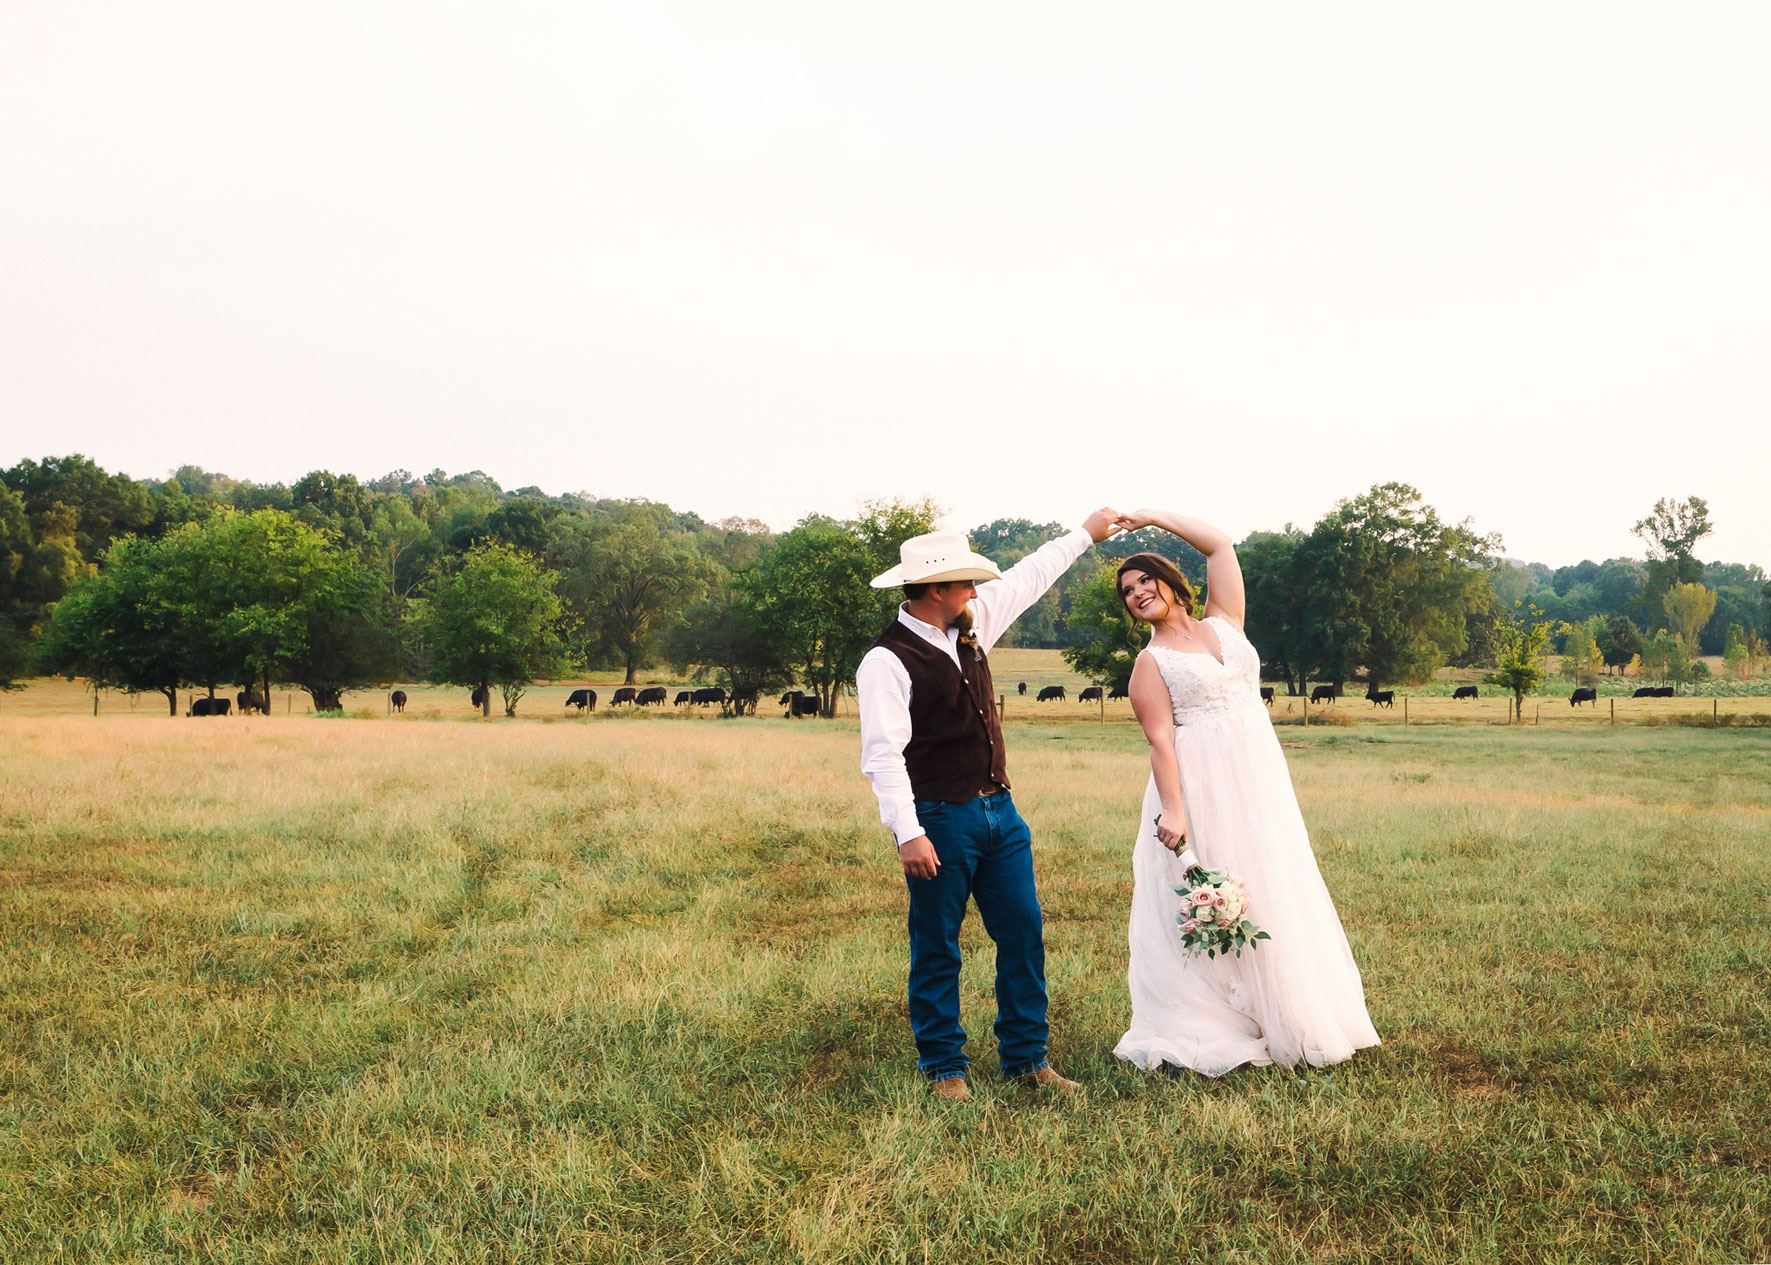 country wedding dancing in a field stella york bride